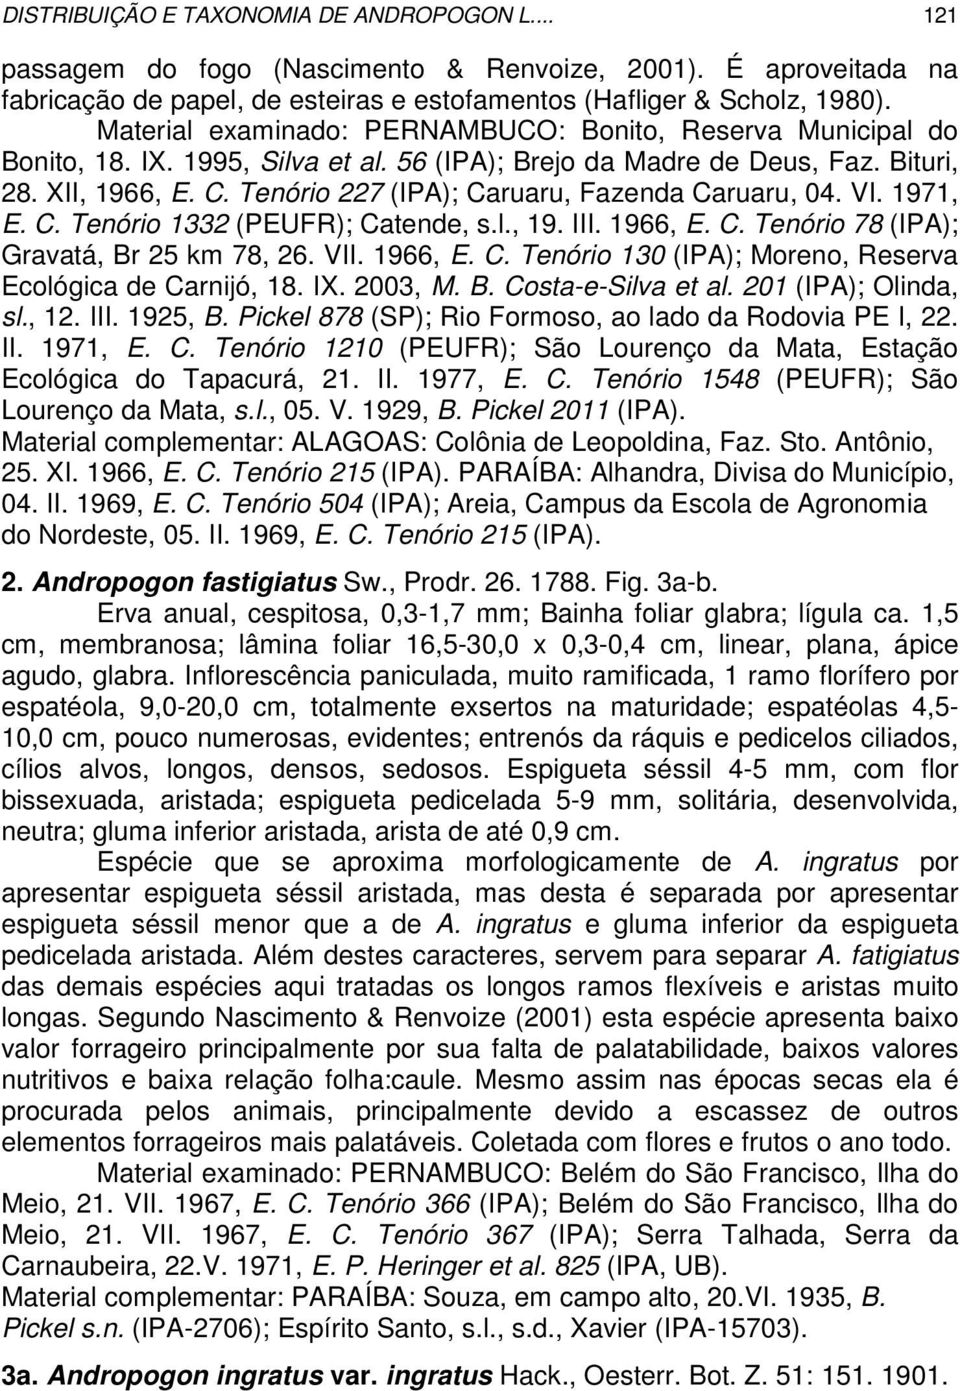 Tenório 227 (IPA); Caruaru, Fazenda Caruaru, 04. VI. 1971, E. C. Tenório 1332 (PEUFR); Catende, s.l., 19. III. 1966, E. C. Tenório 78 (IPA); Gravatá, Br 25 km 78, 26. VII. 1966, E. C. Tenório 130 (IPA); Moreno, Reserva Ecológica de Carnijó, 18.